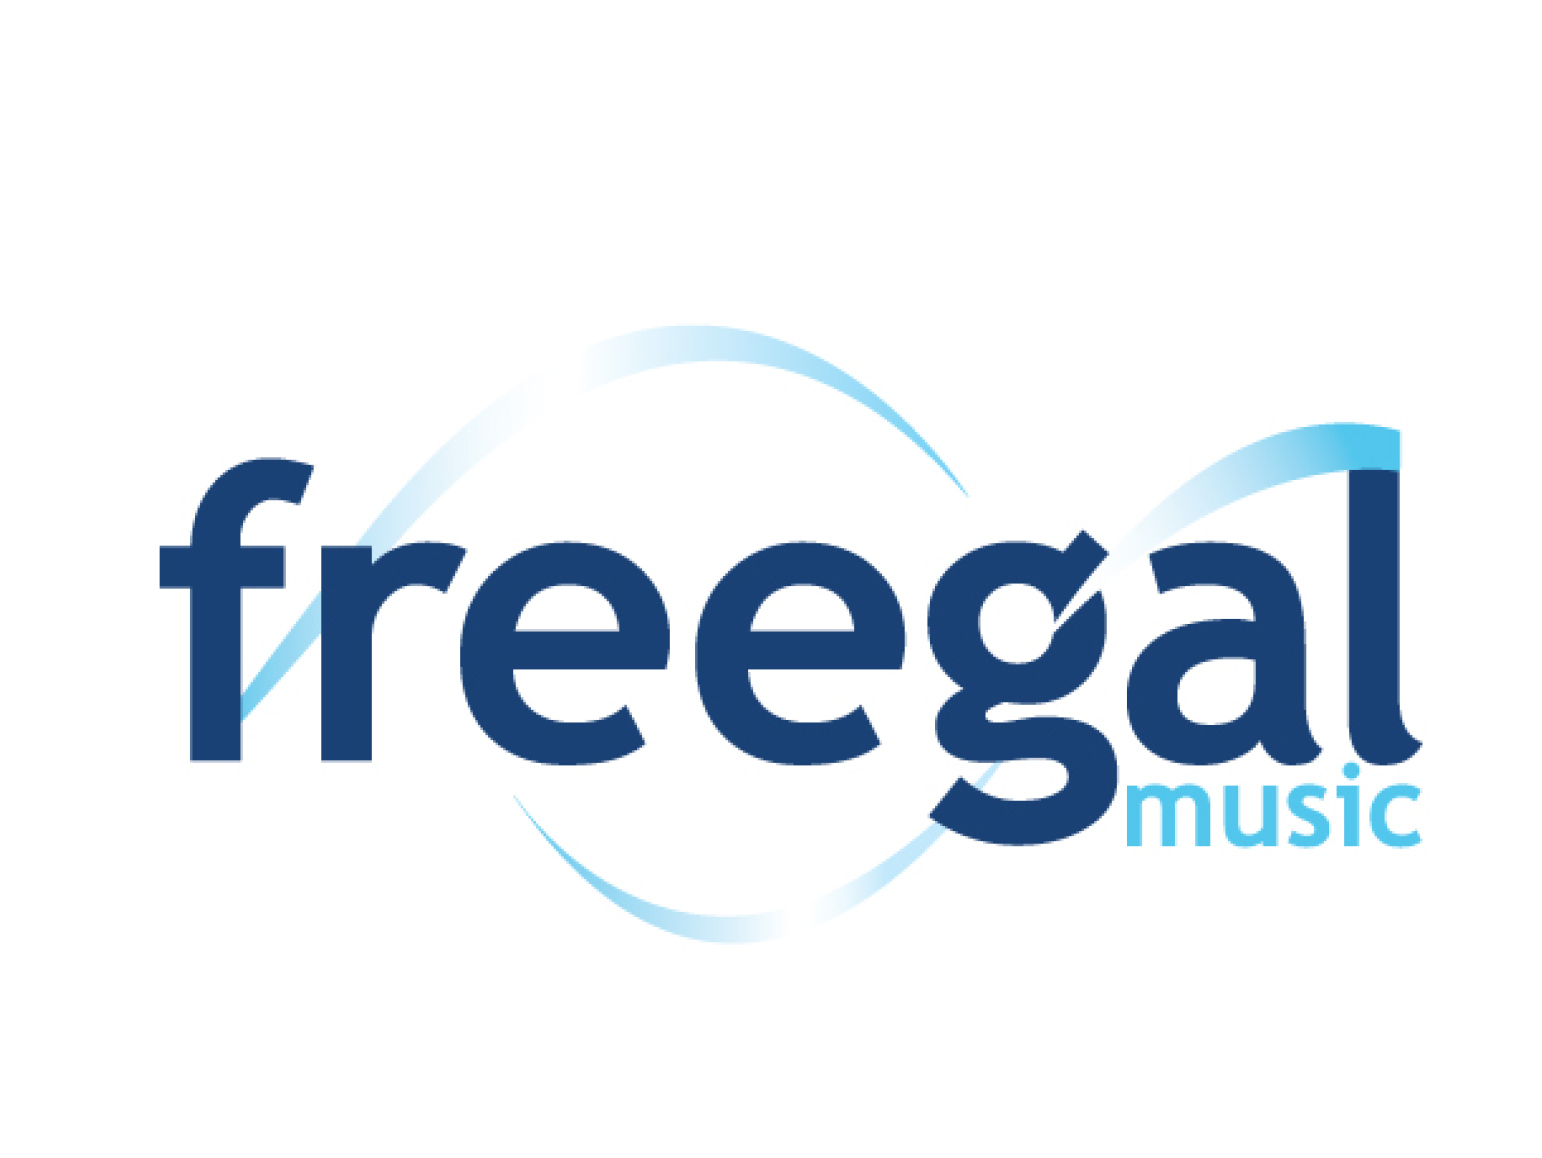 Freegal logo